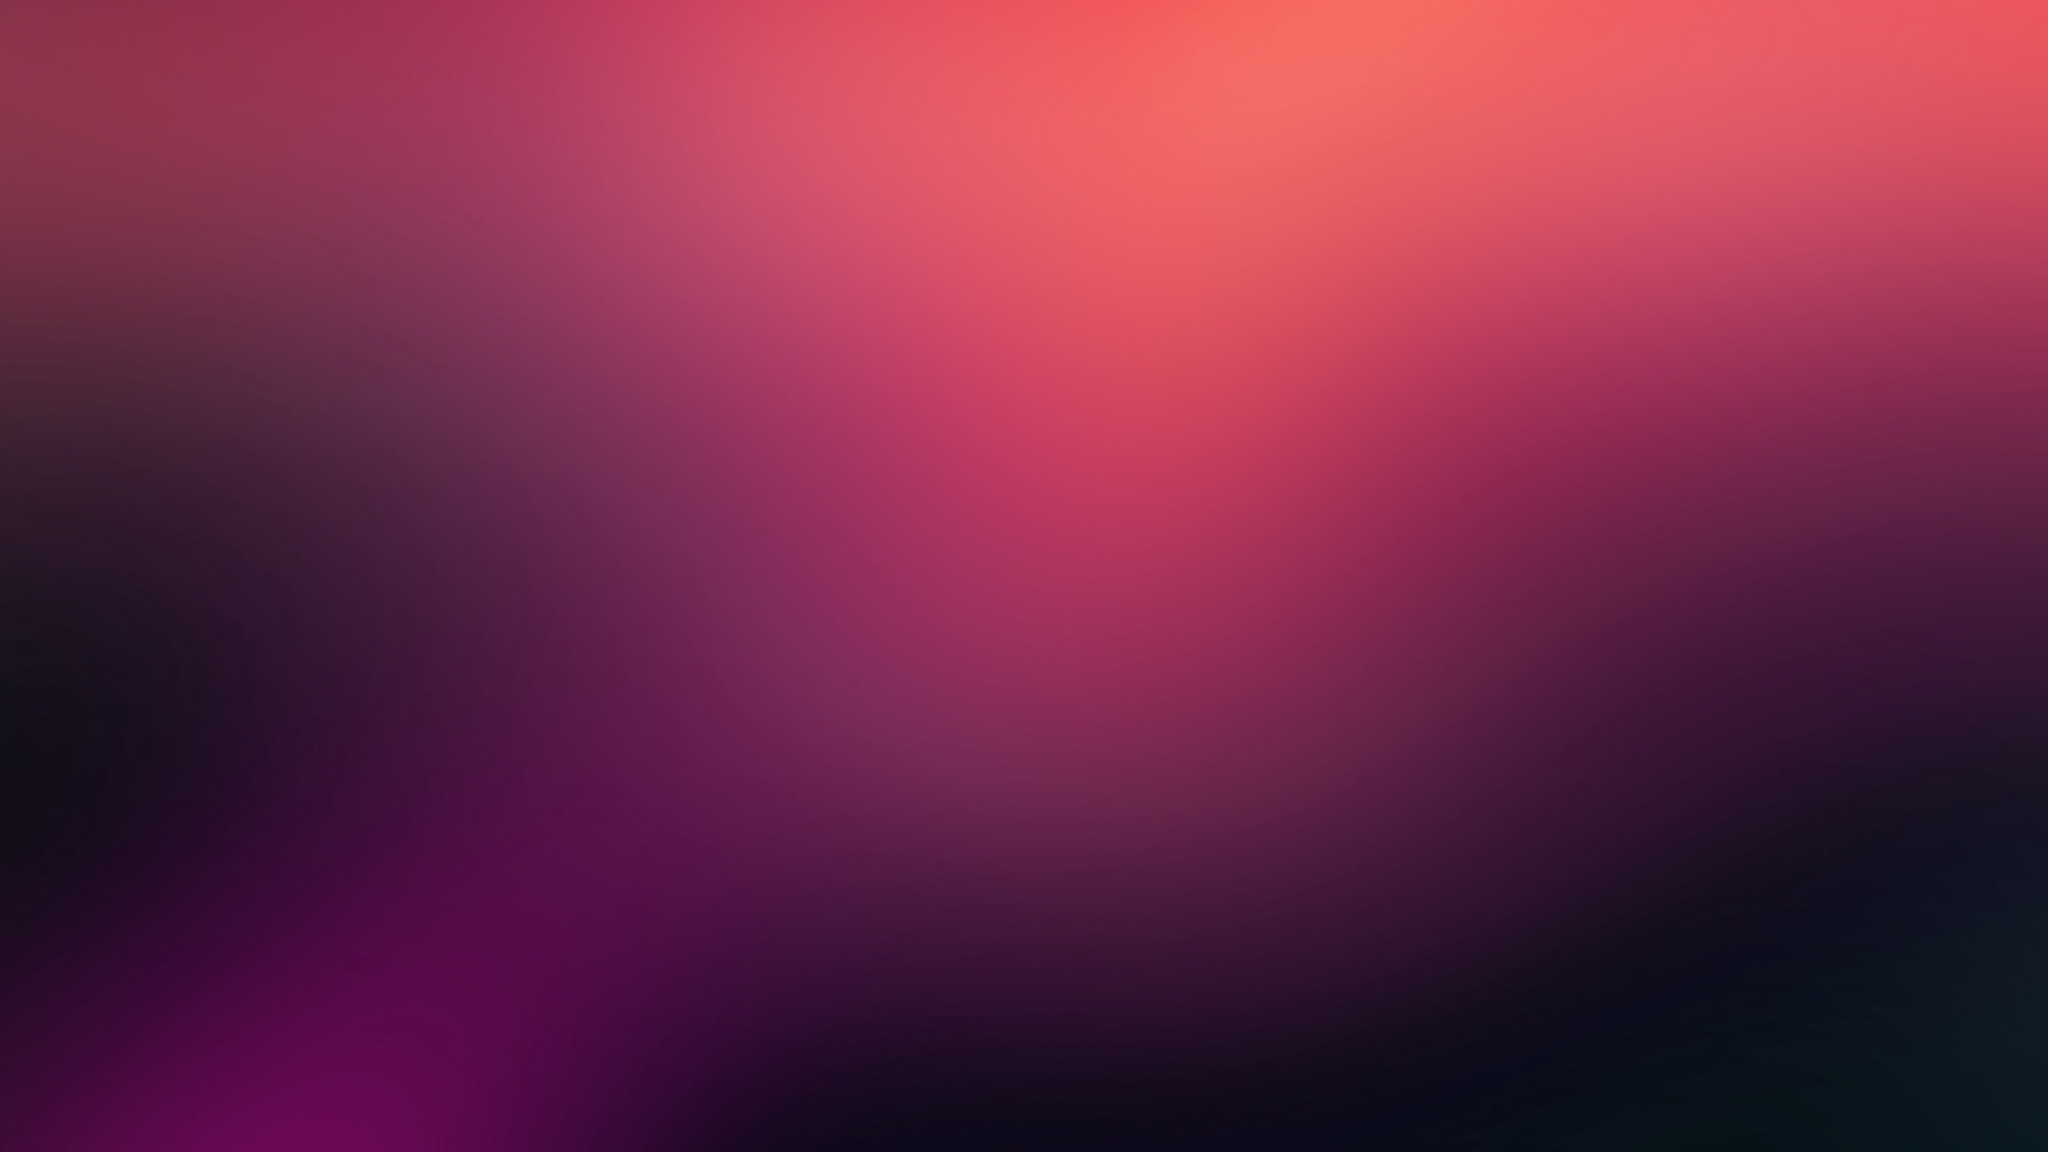 Download Wallpaper Colorful - Dark Aesthetic Gradient Background - HD Wallpaper 